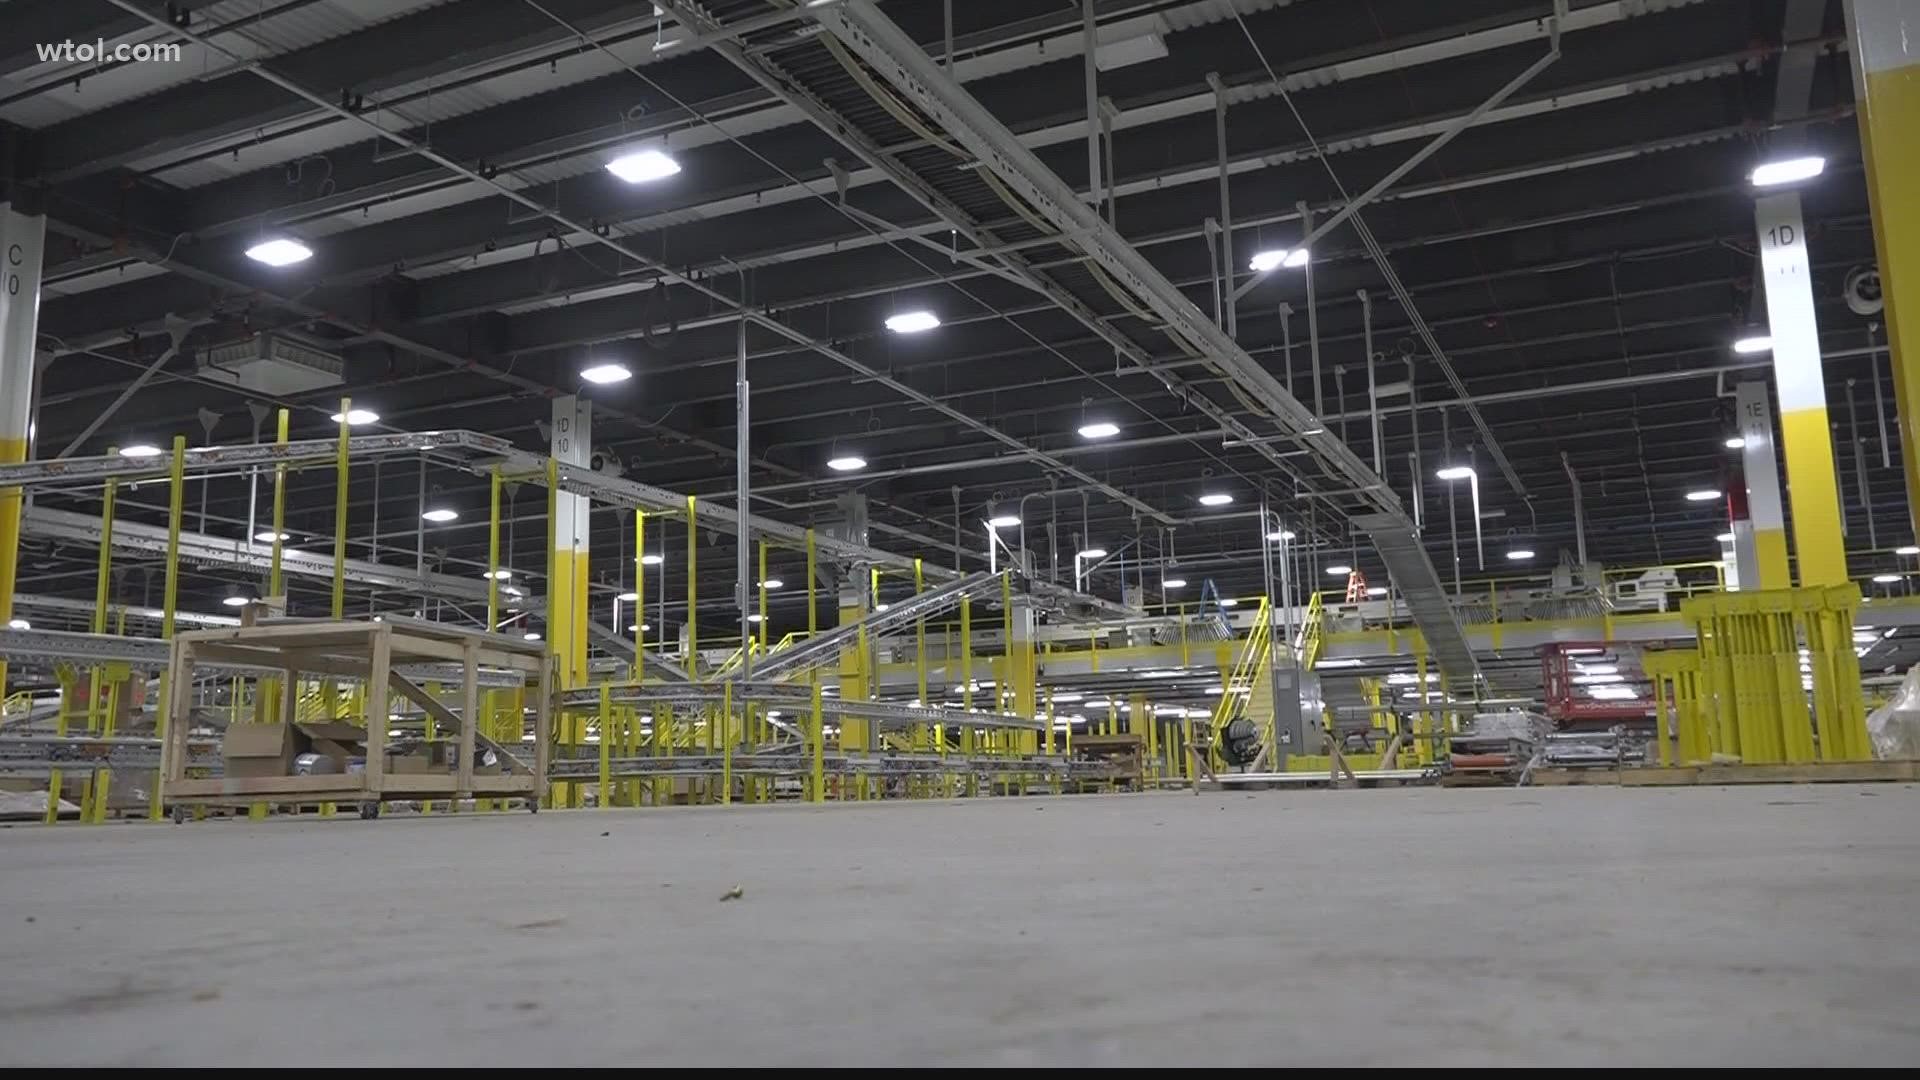 Peloton, UPS and Amazon are bringing plenty of new jobs to the area.